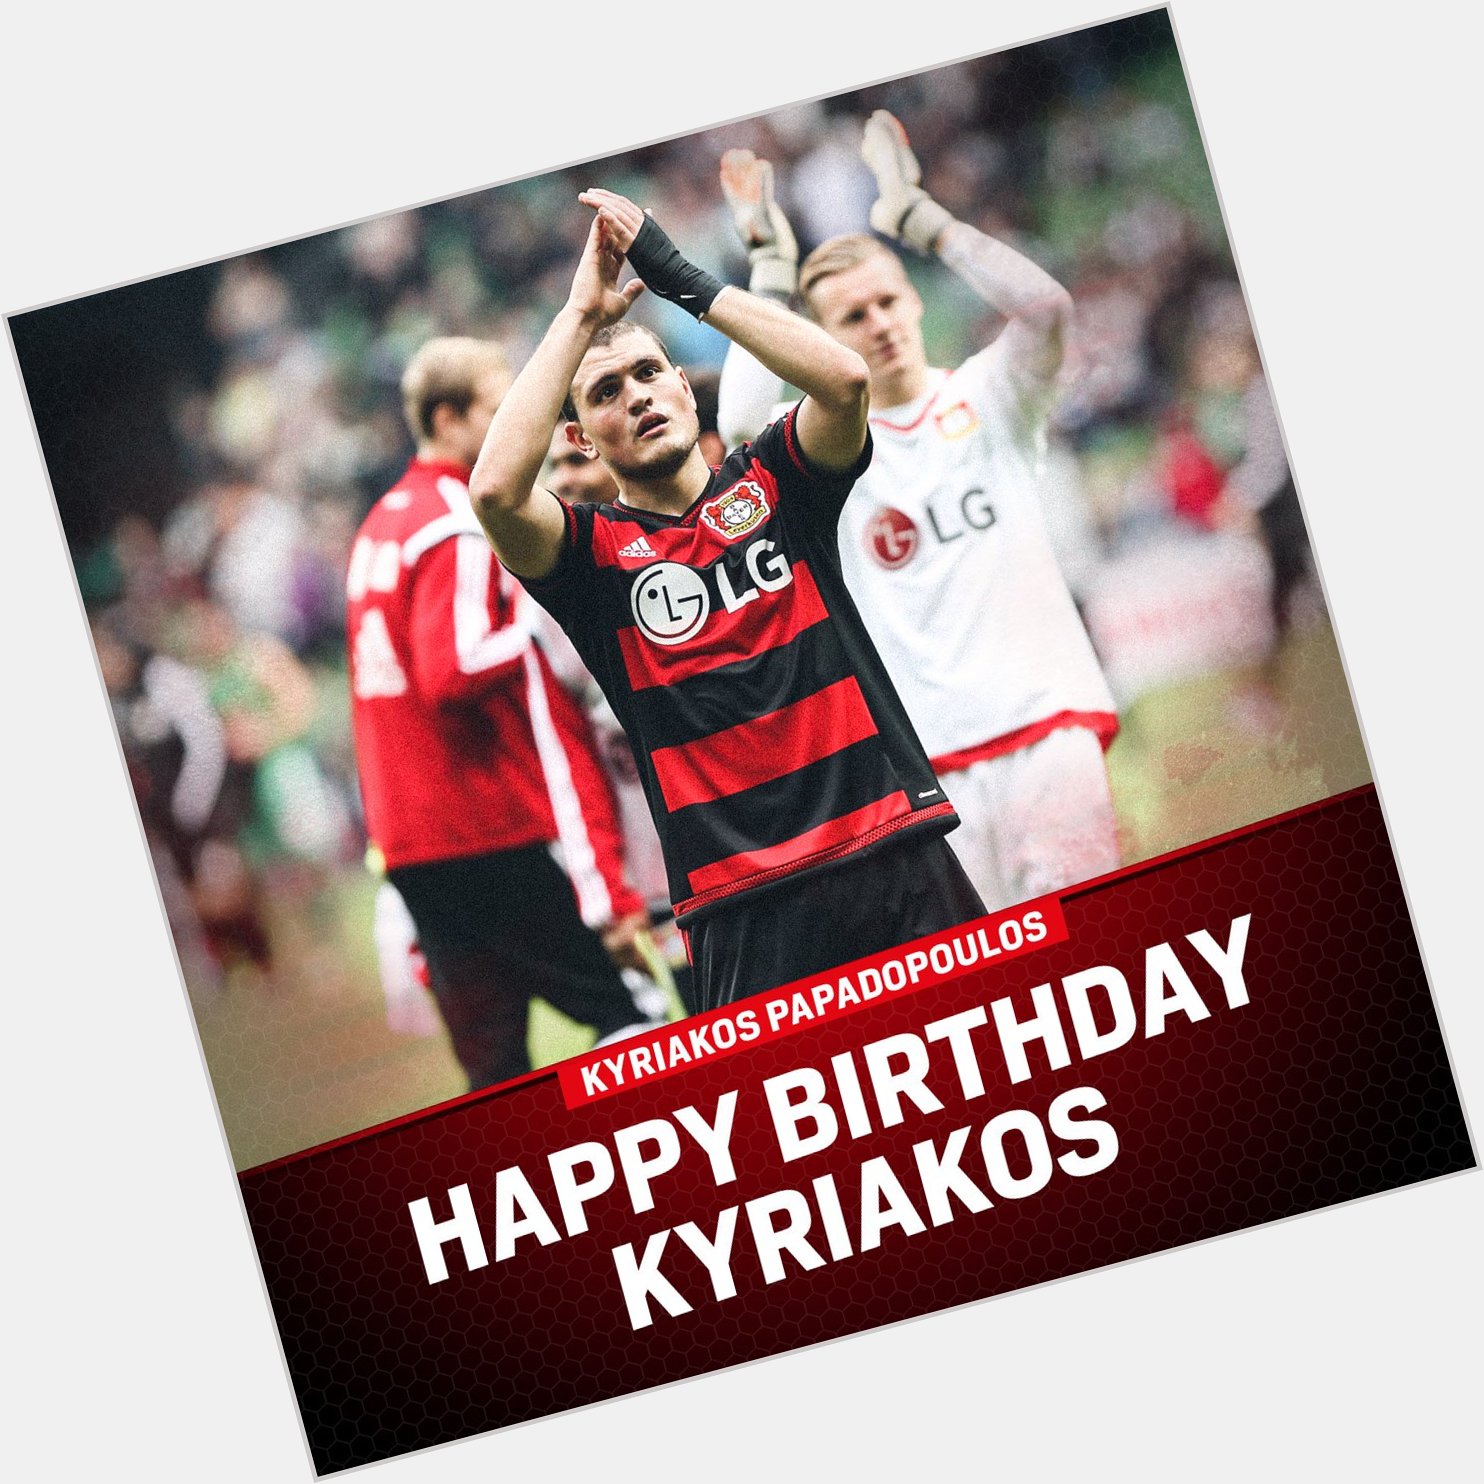 We are wishing a Happy Birthday to Kyriakos Kyriakos turns 2 6 years old today! 